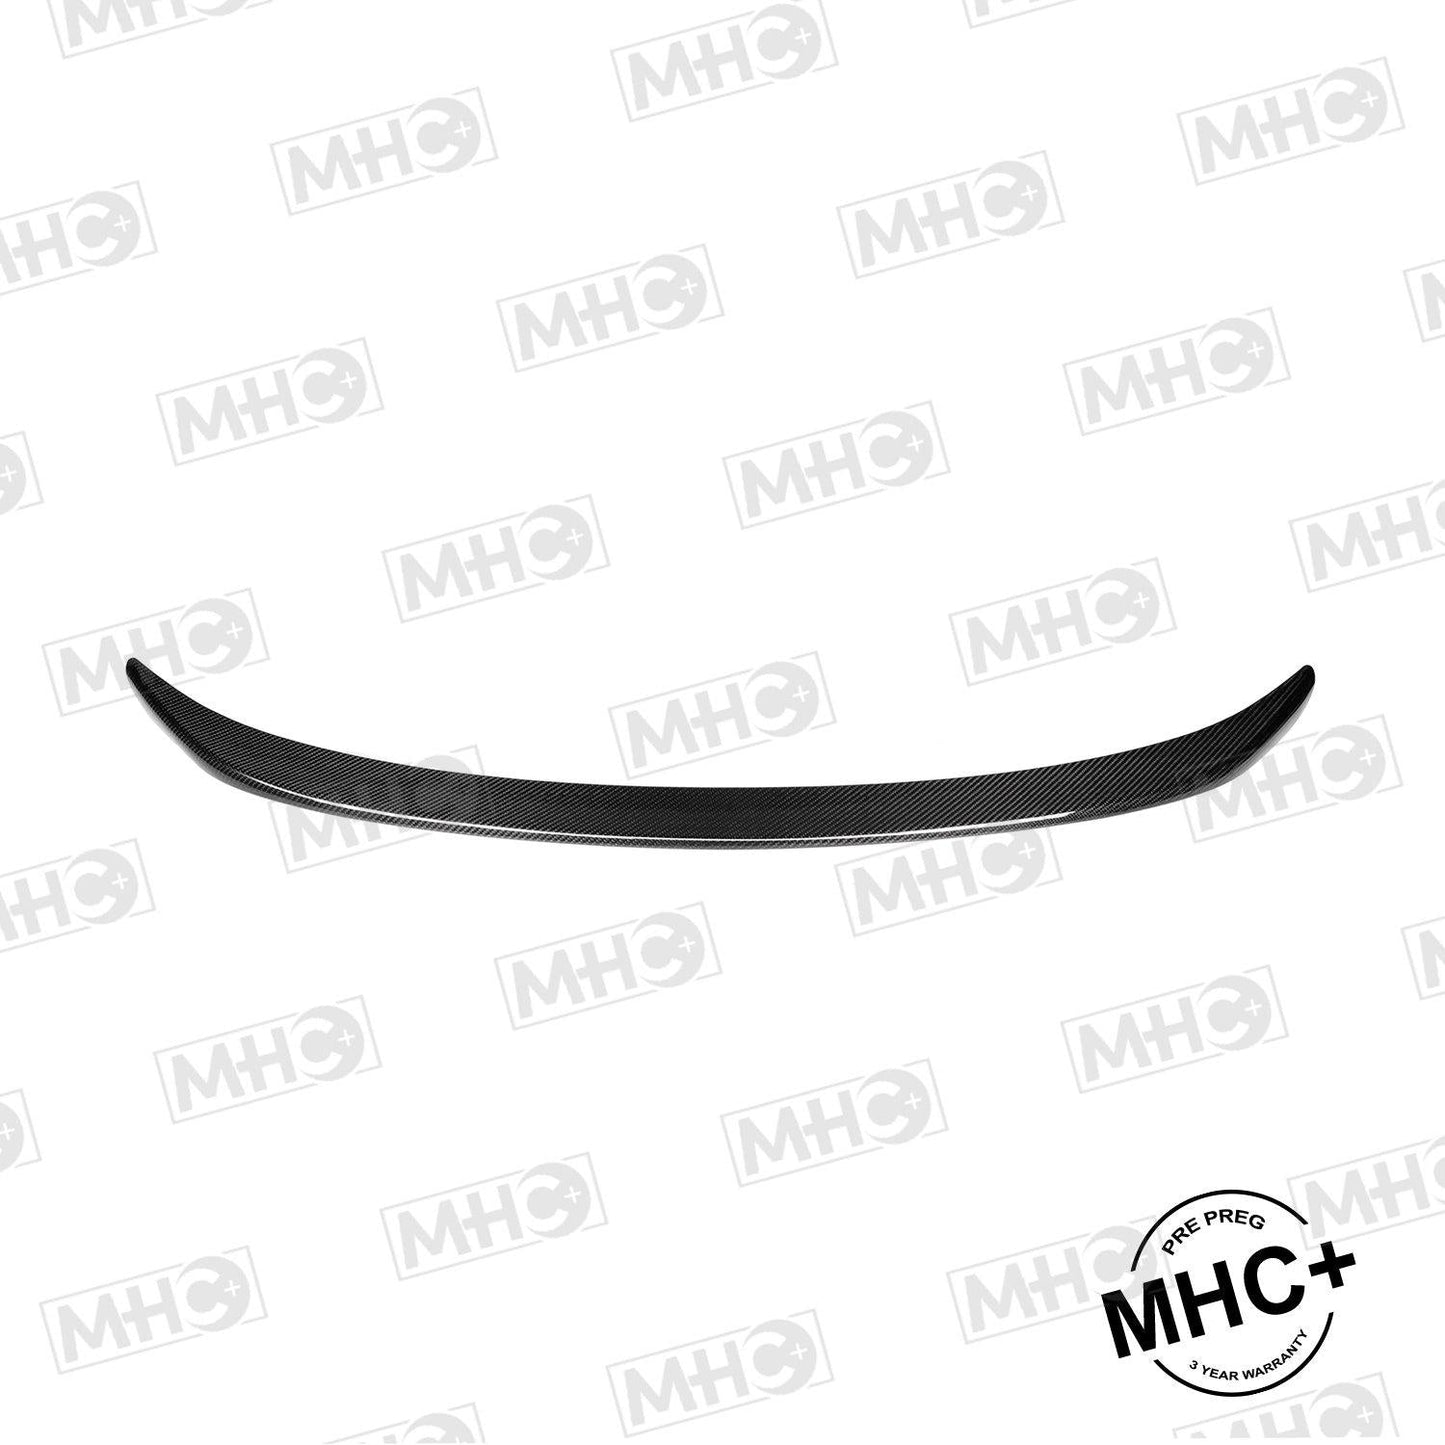 MHC+ BMW M3 Performance Style Rear Spoiler In Pre Preg Carbon Fibre (G80)